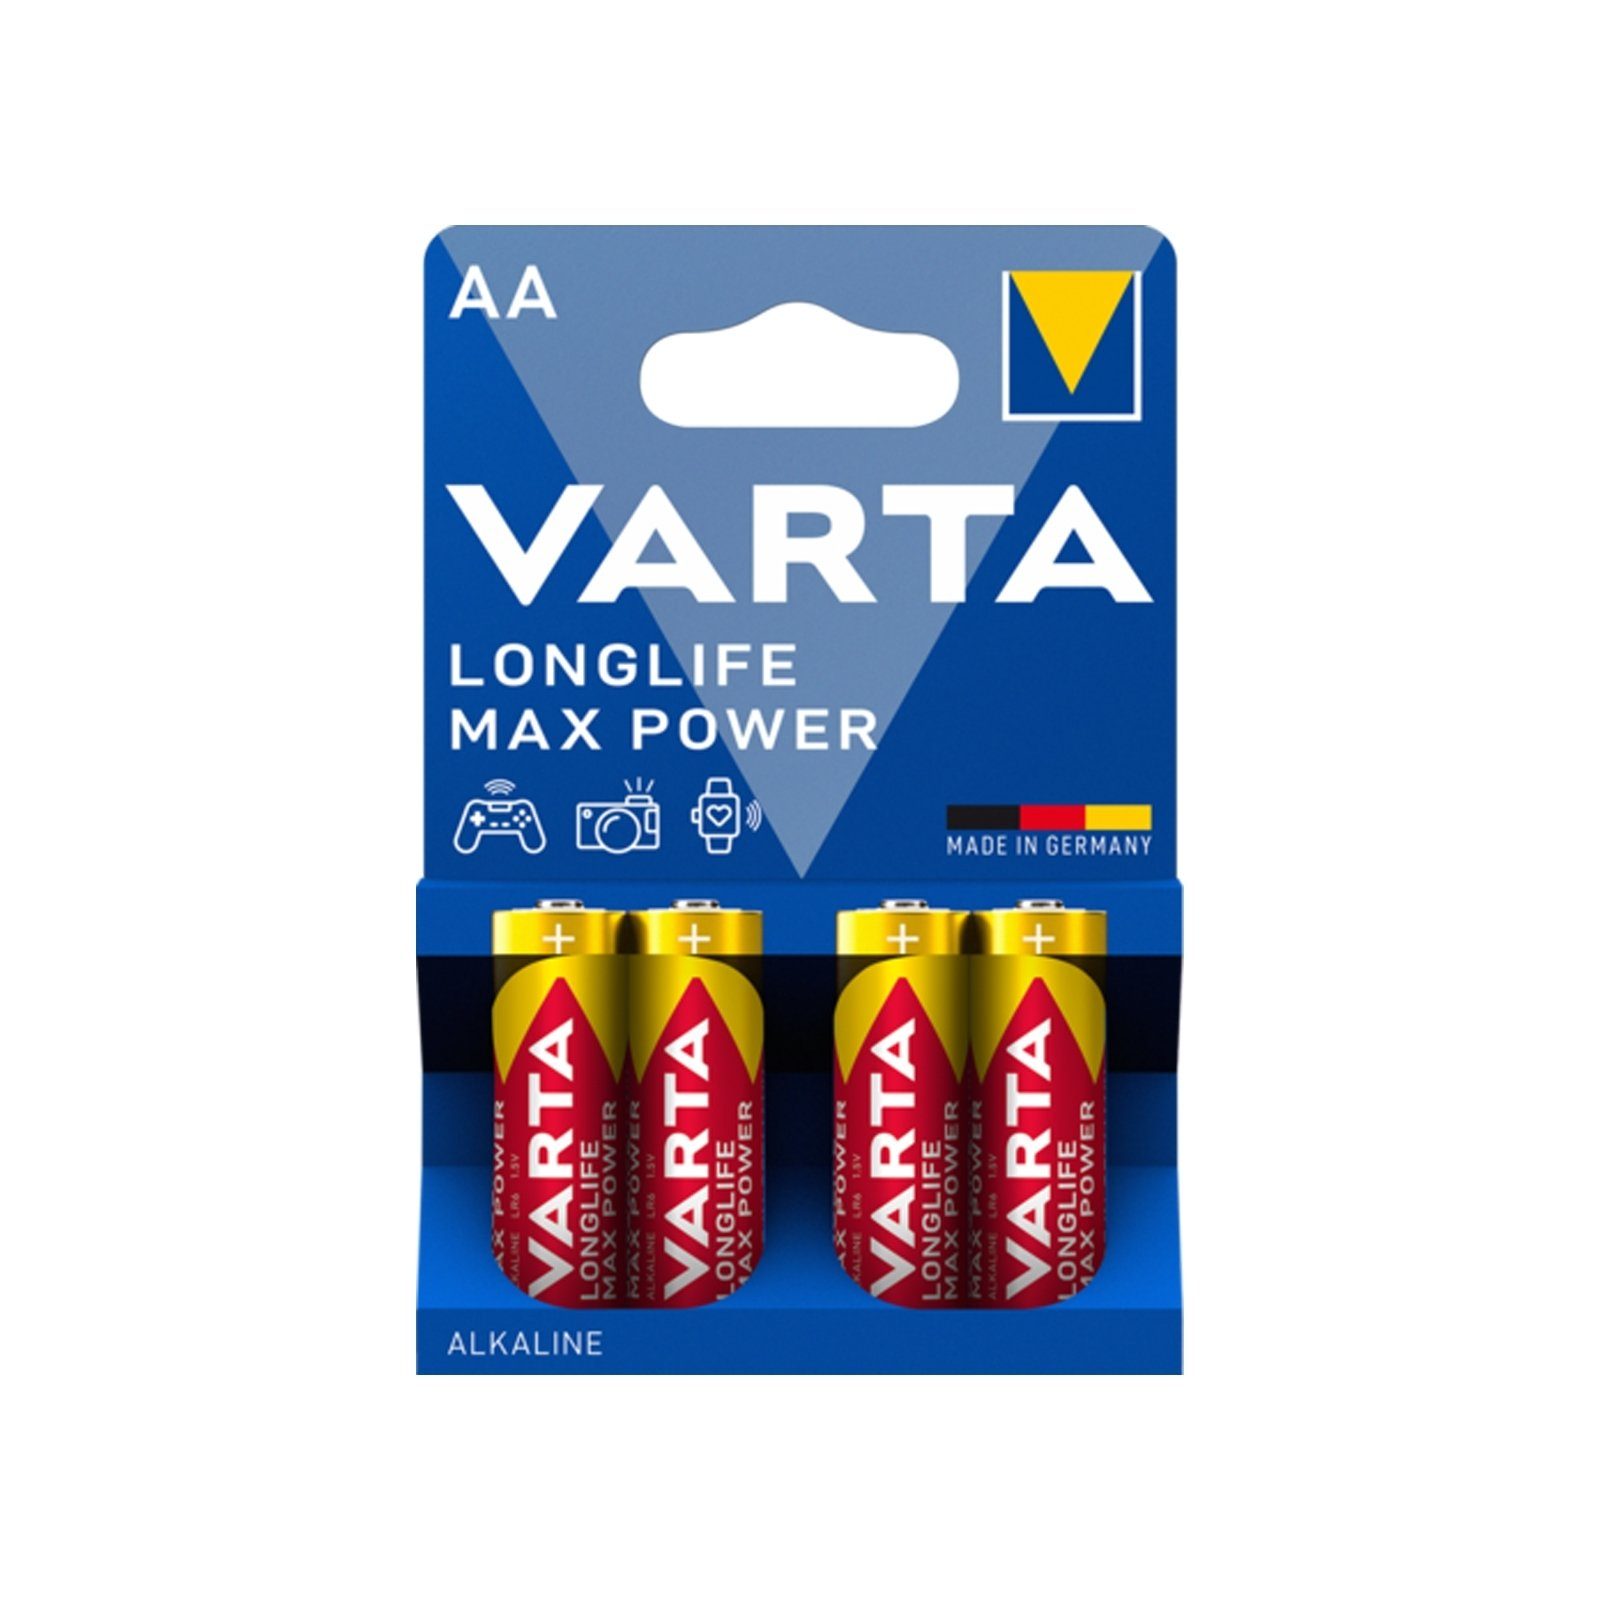 Power Batterie 4xAA Longlife VARTA Max Batterie